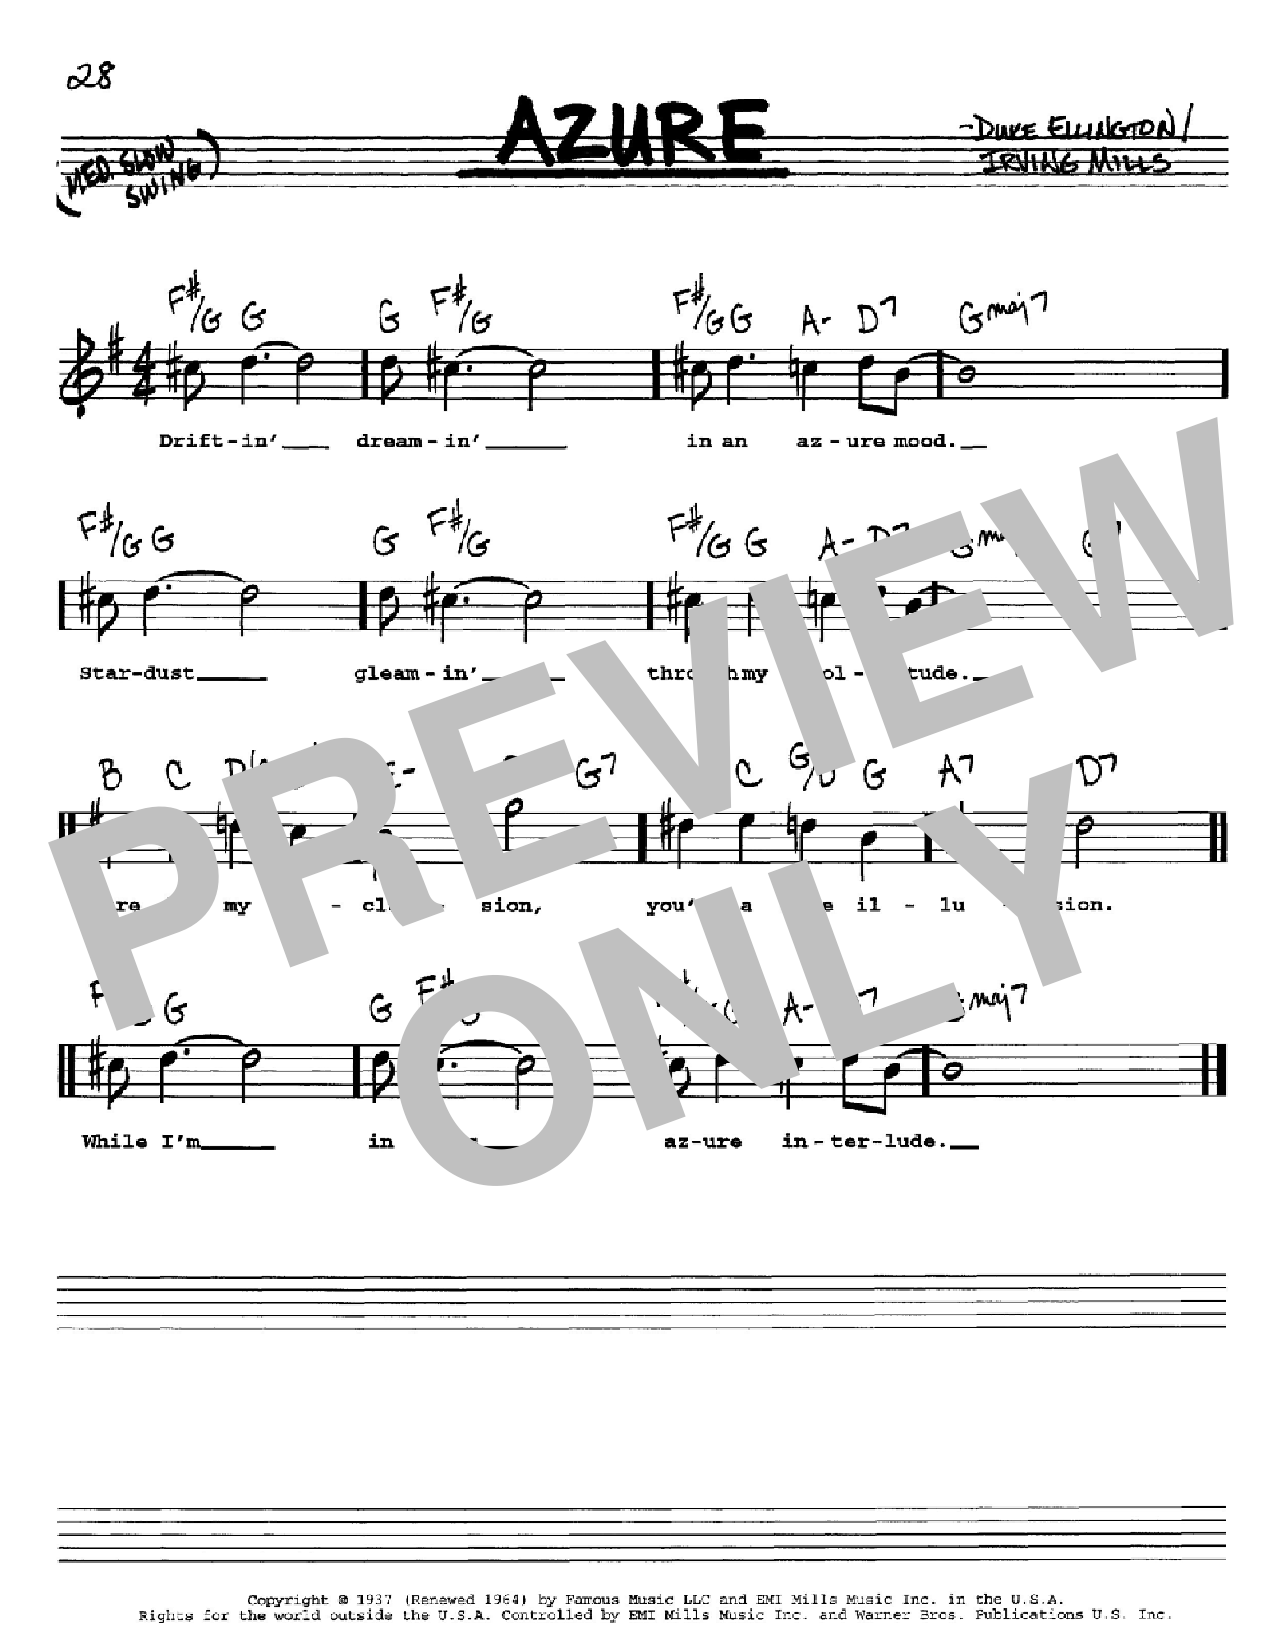 Download Duke Ellington Azure Sheet Music